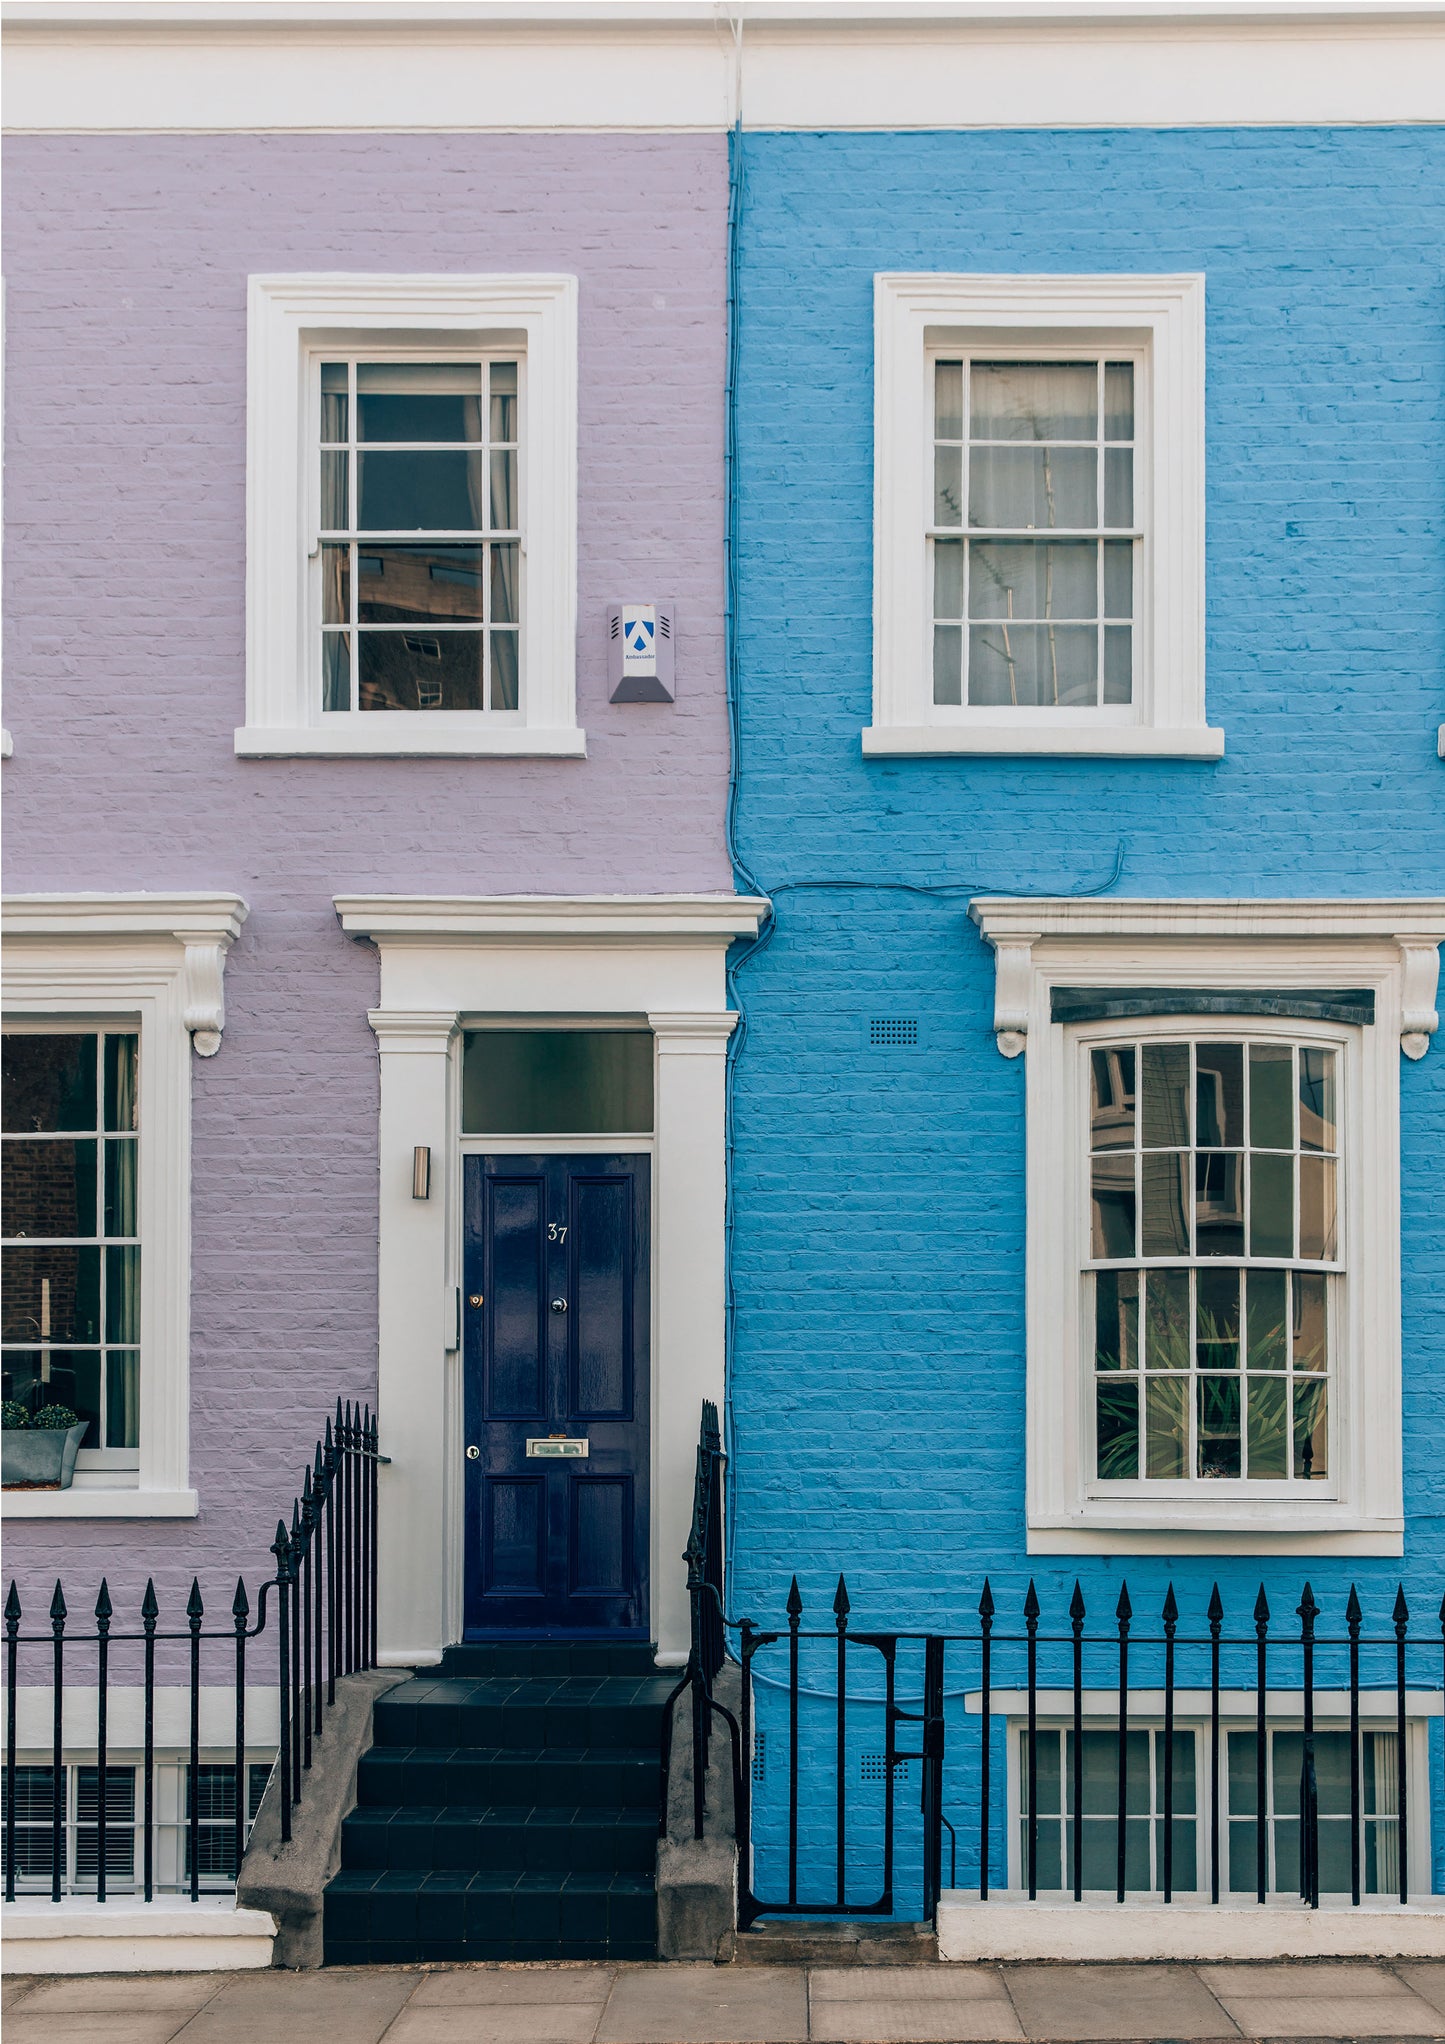 Purple & Blue House, London